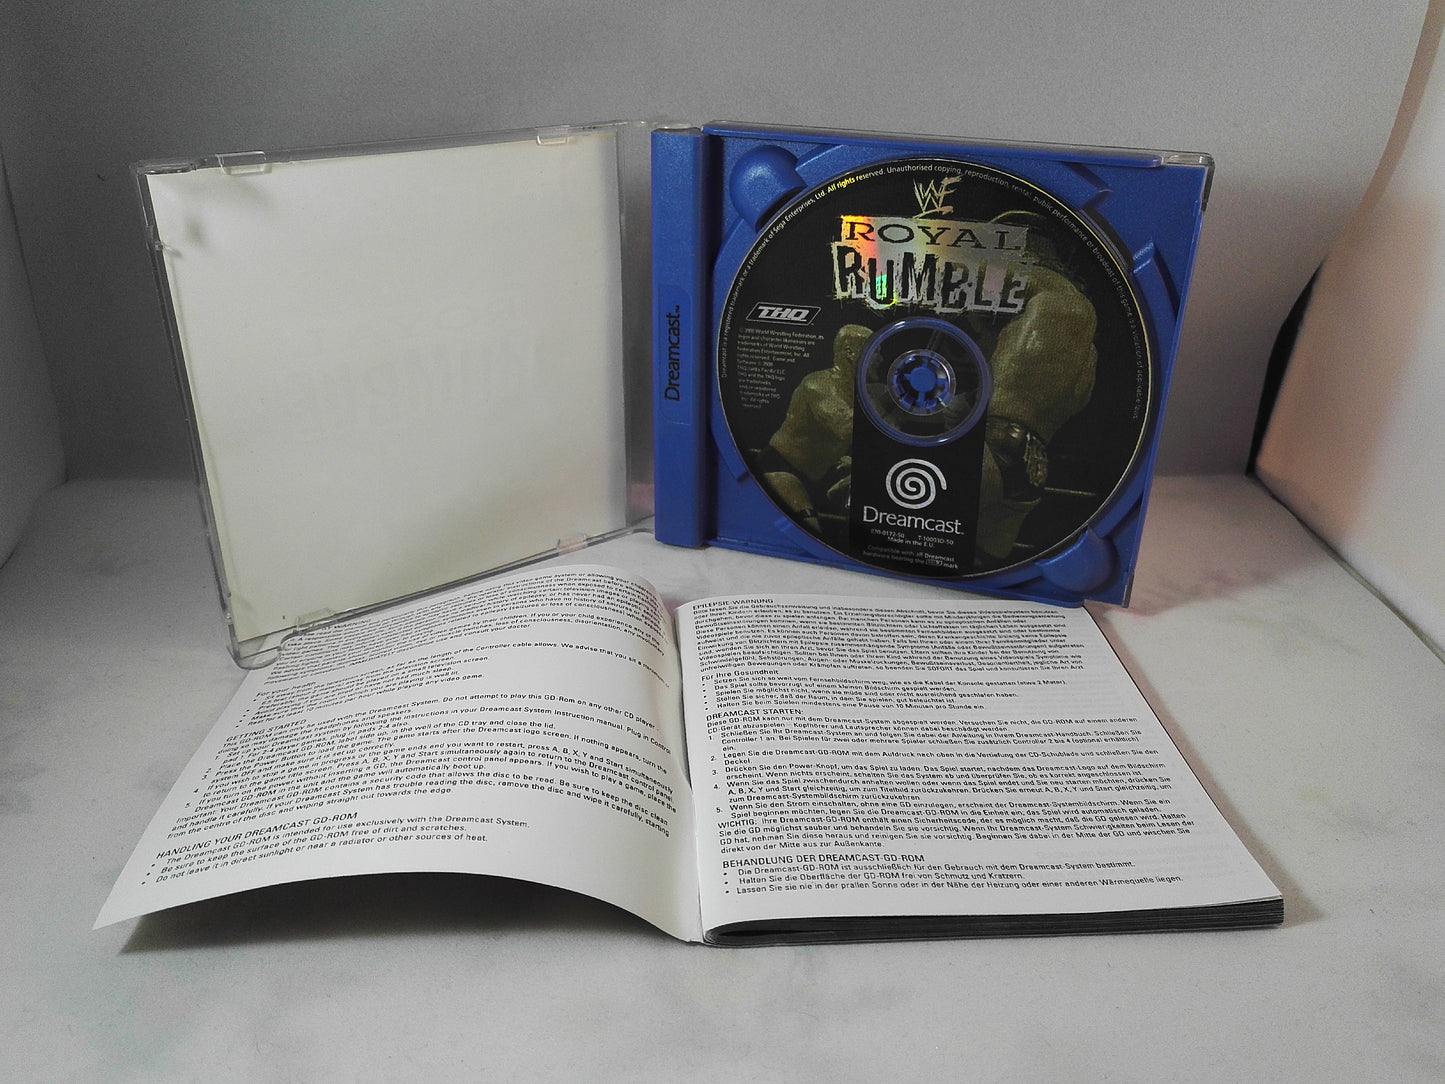 WWF Royal Rumble (Sega Dreamcast) game with WWF Royal Rumble 2008 DVD